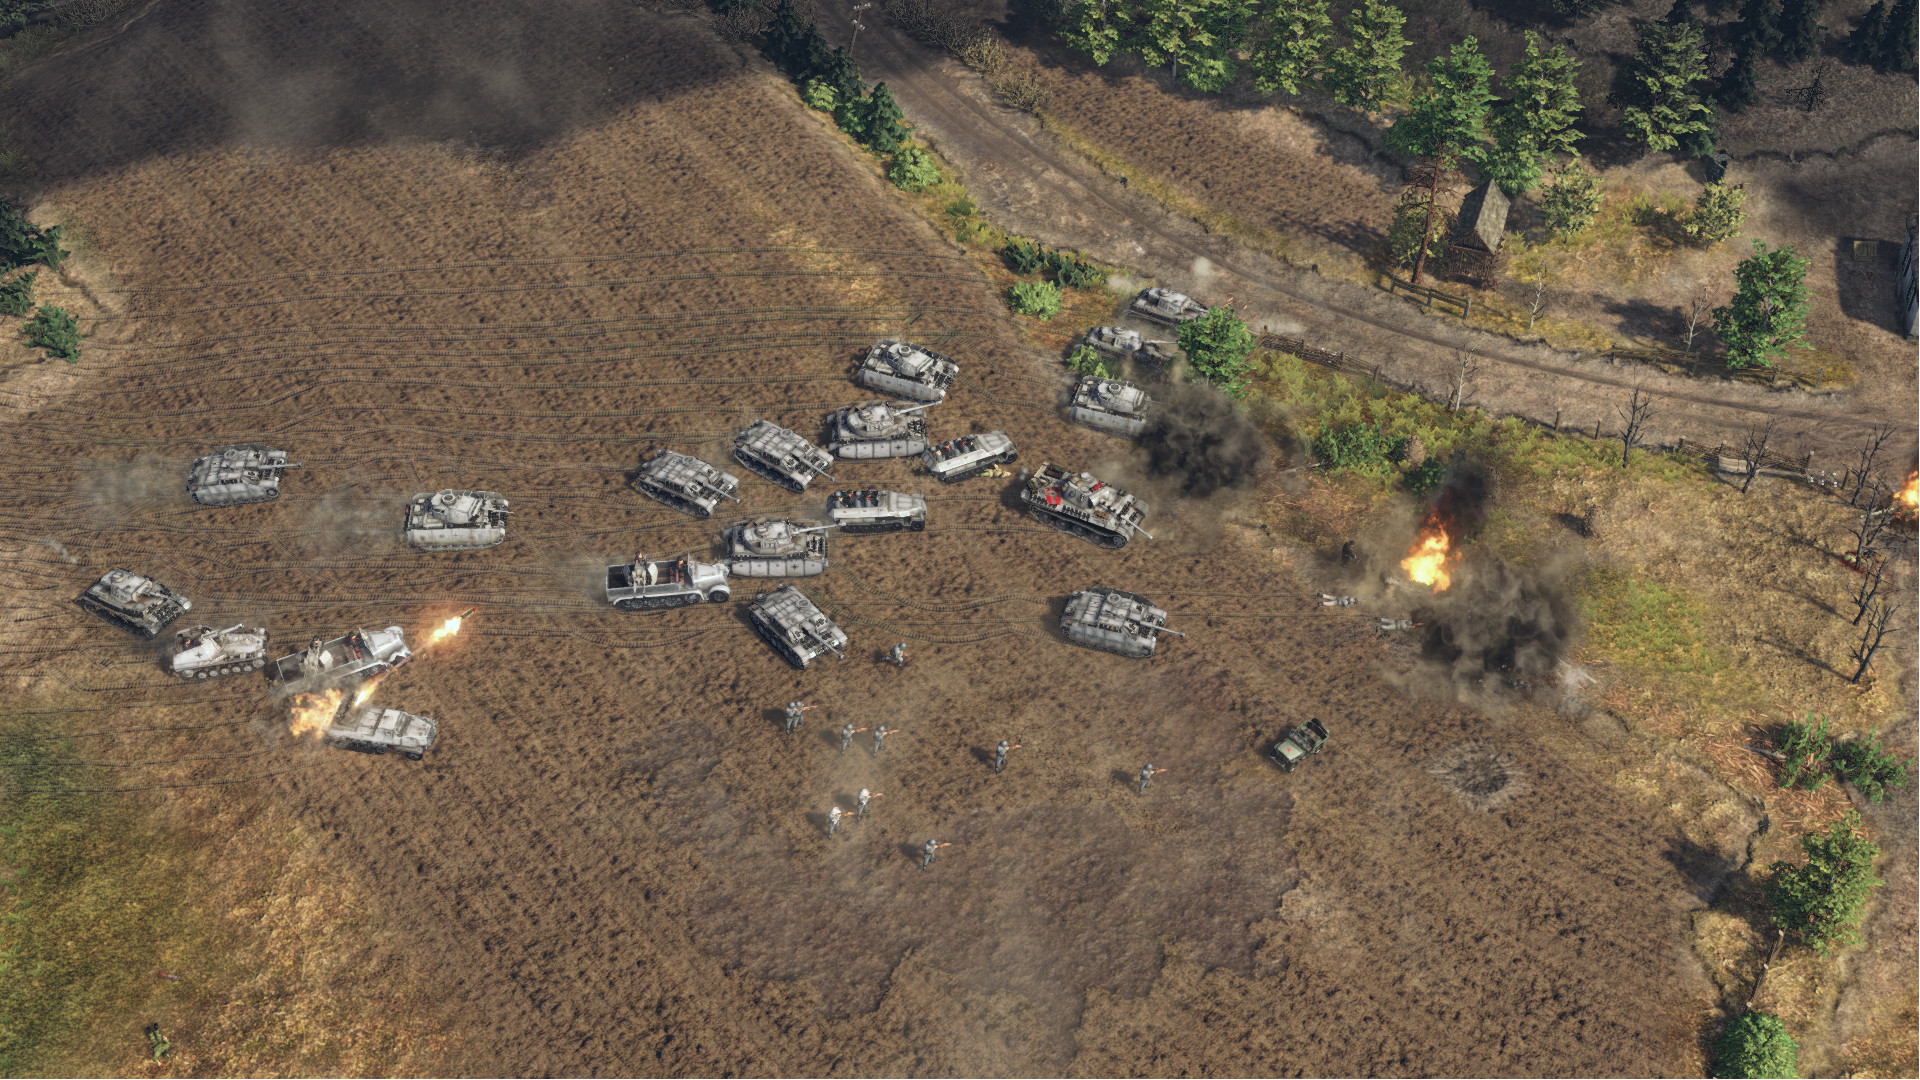 Sudden Strike 4 - Battle of Kursk